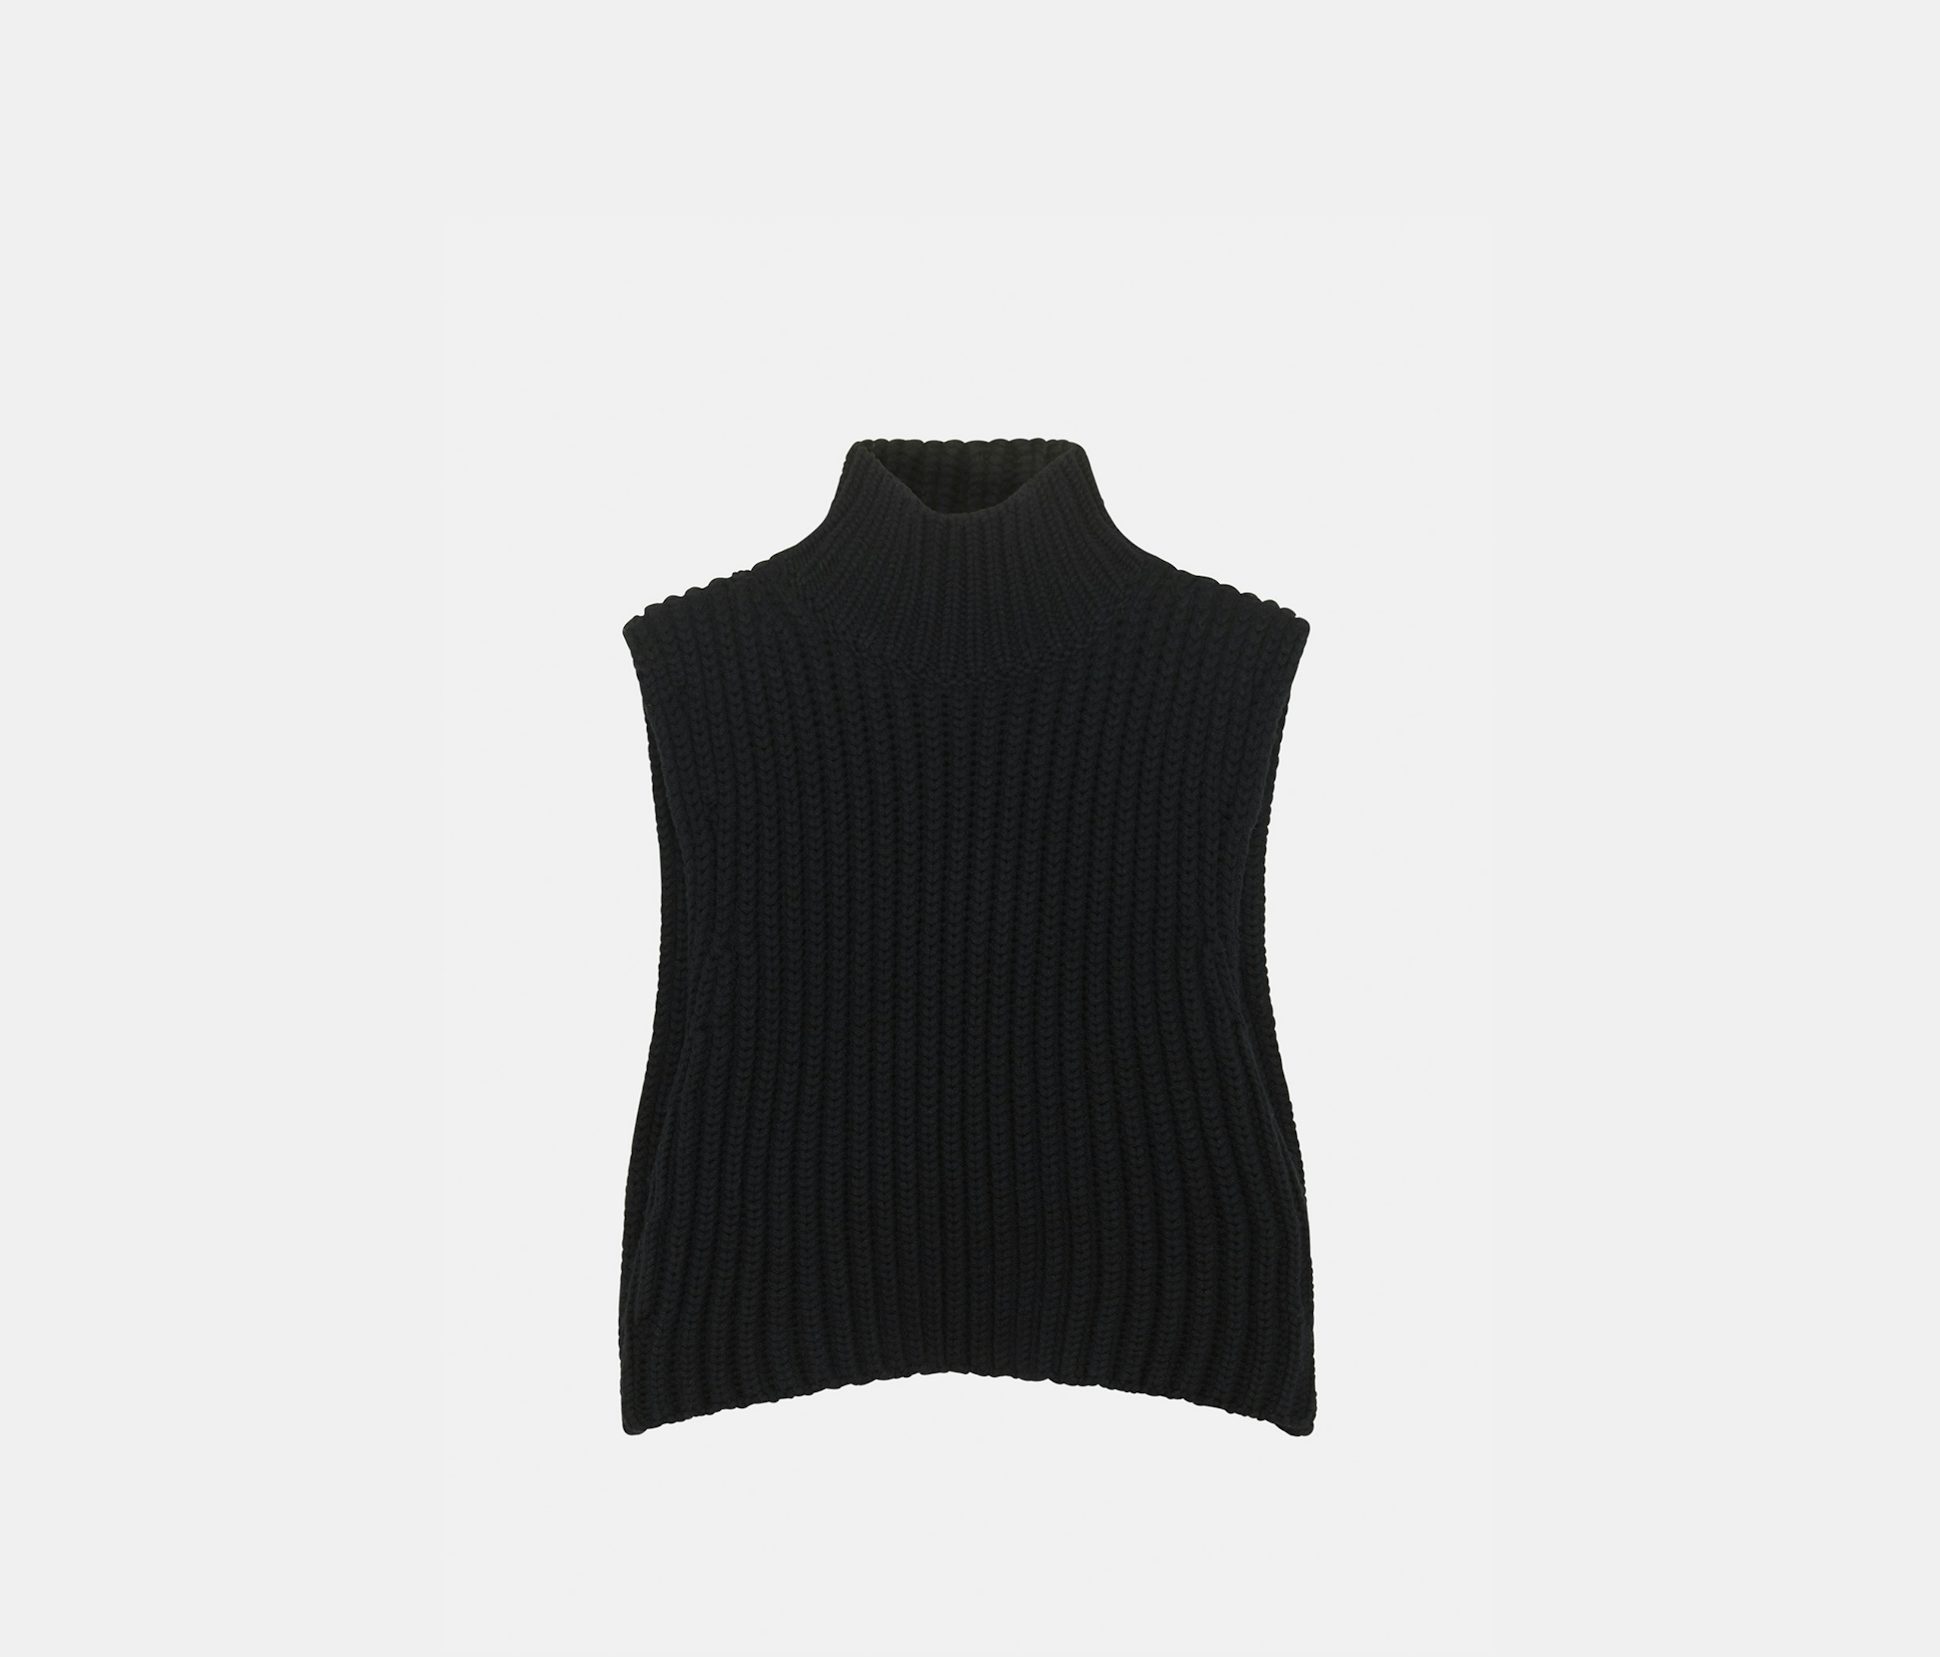 Woolen ribs sweater black - Nina Ricci